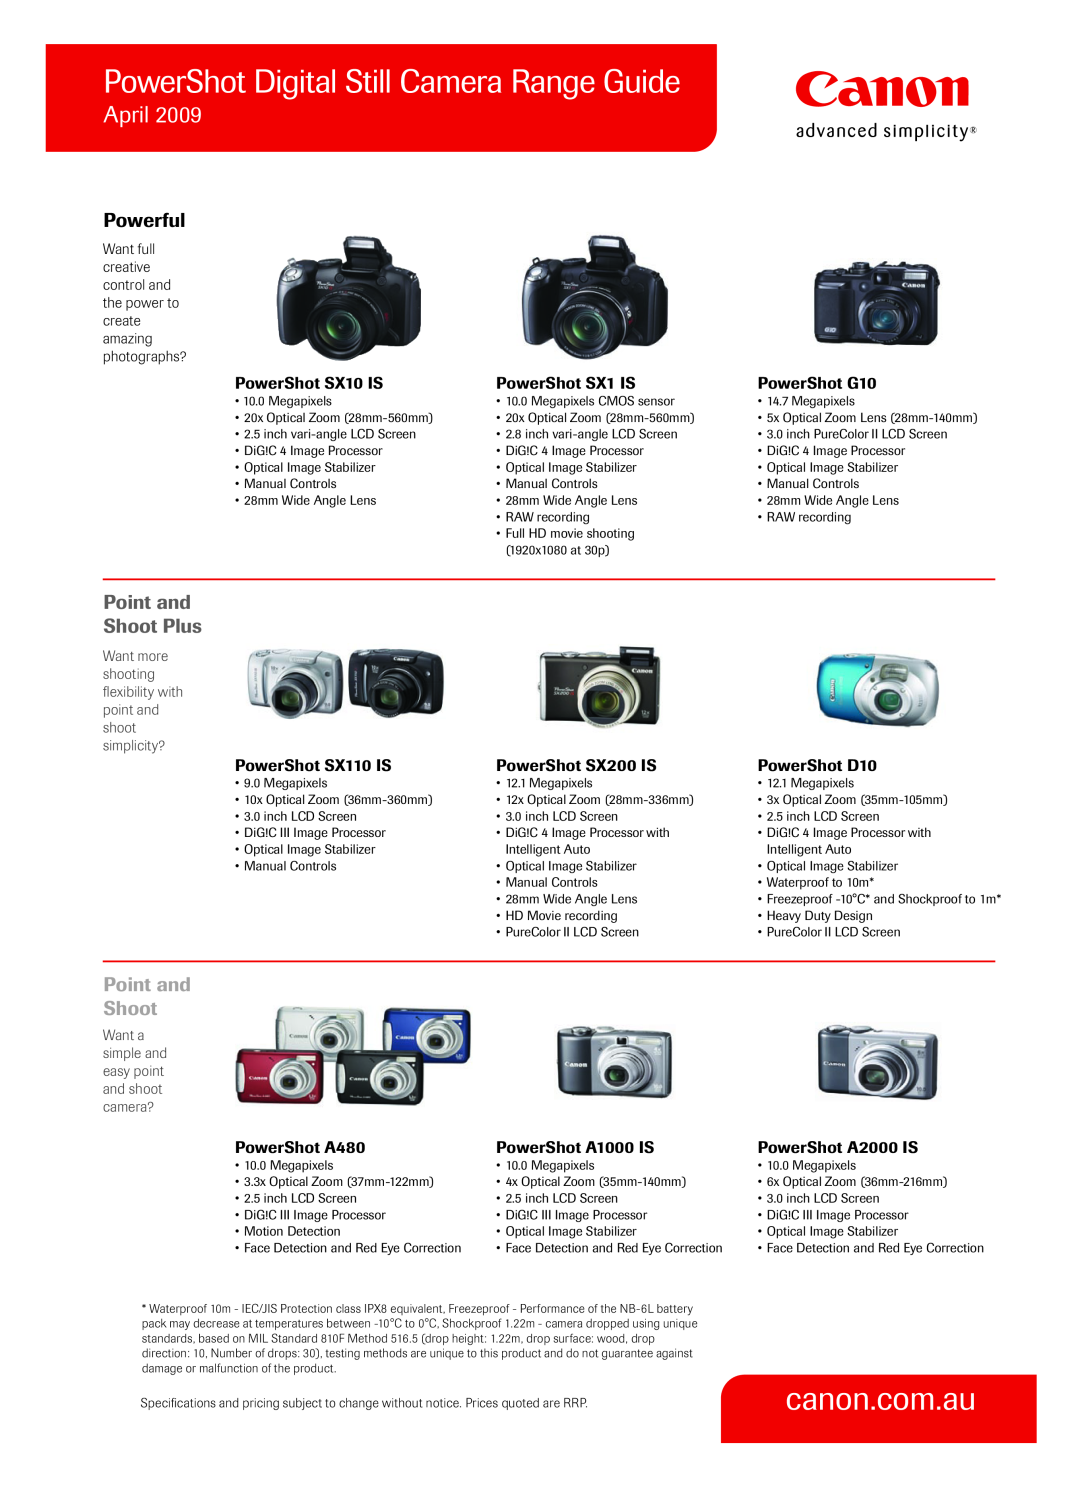 Canon D10, Sx200 Is manual PowerShot Digital Still Camera Range Guide, canon.com.au, April, Powerful, Point and Shoot Plus 